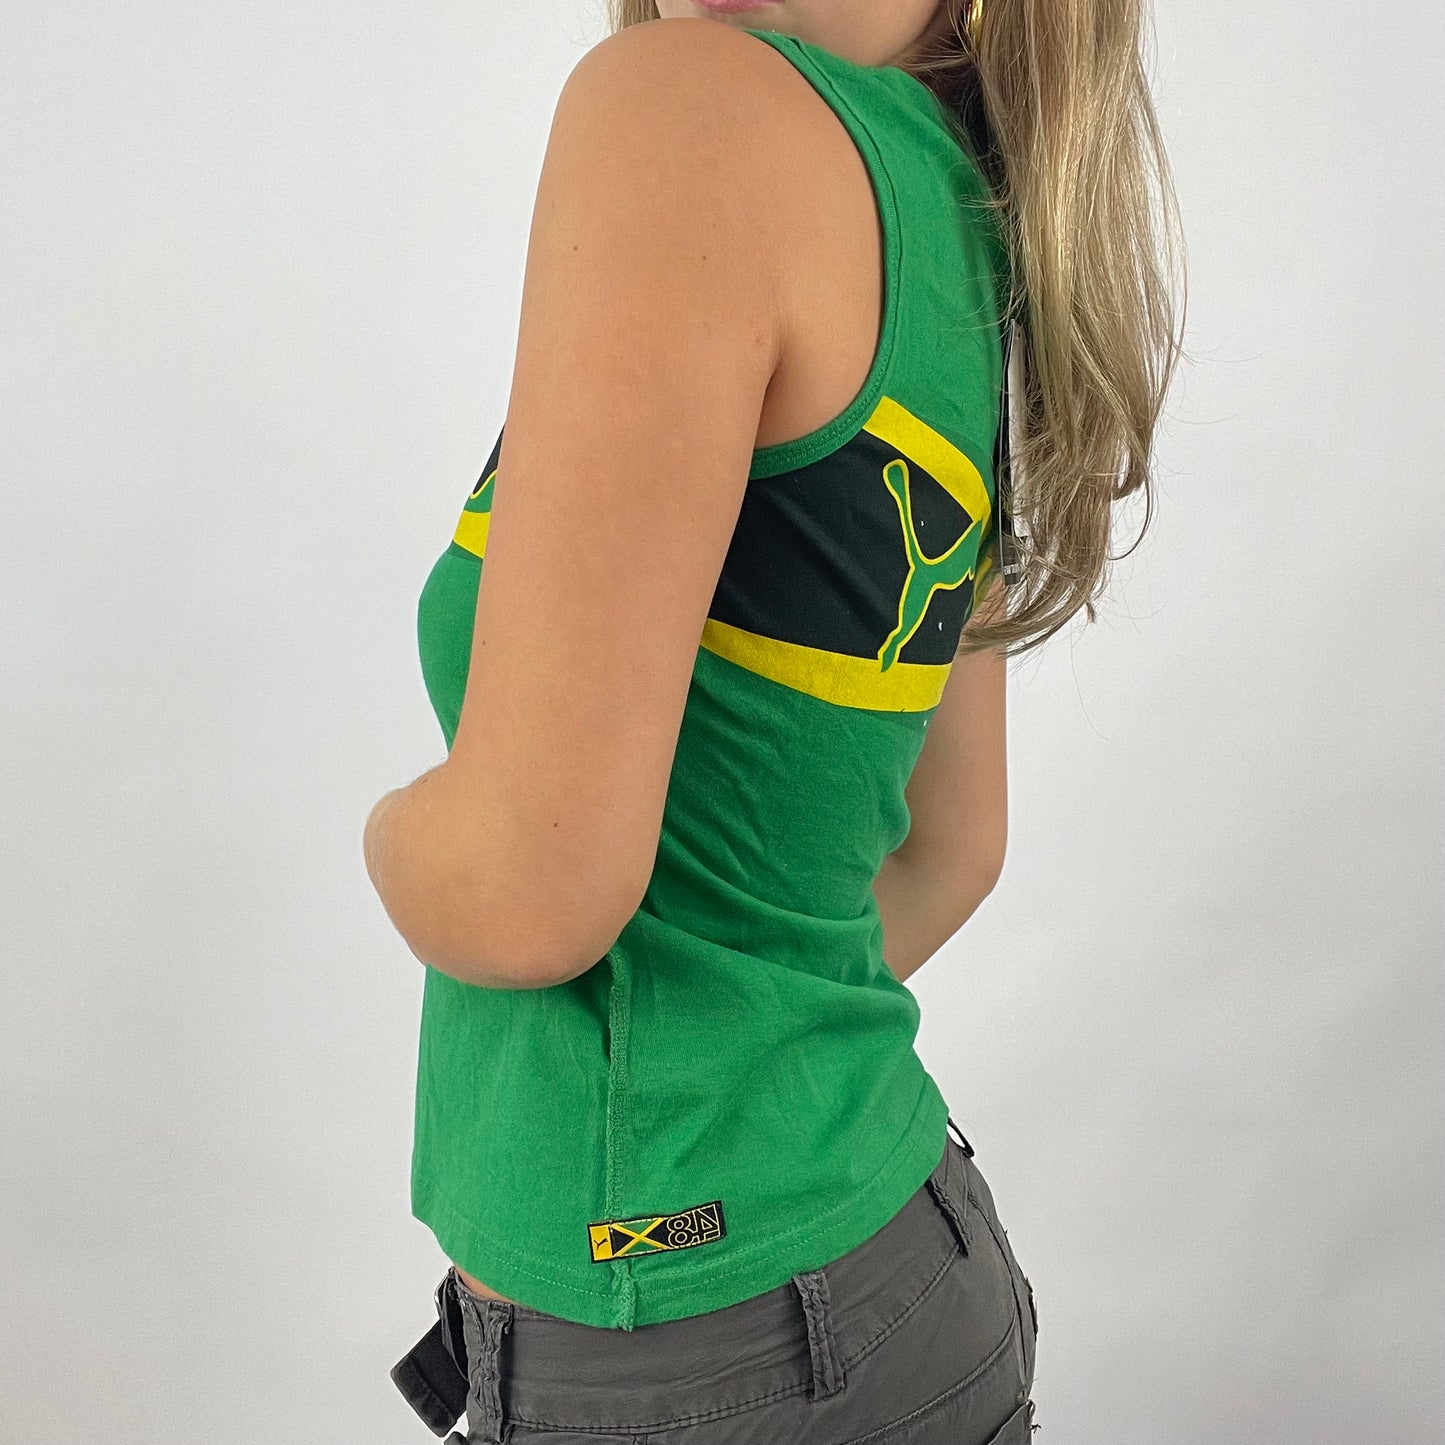 VINTAGE GEMS DROP | green puma “jamaica” vest top